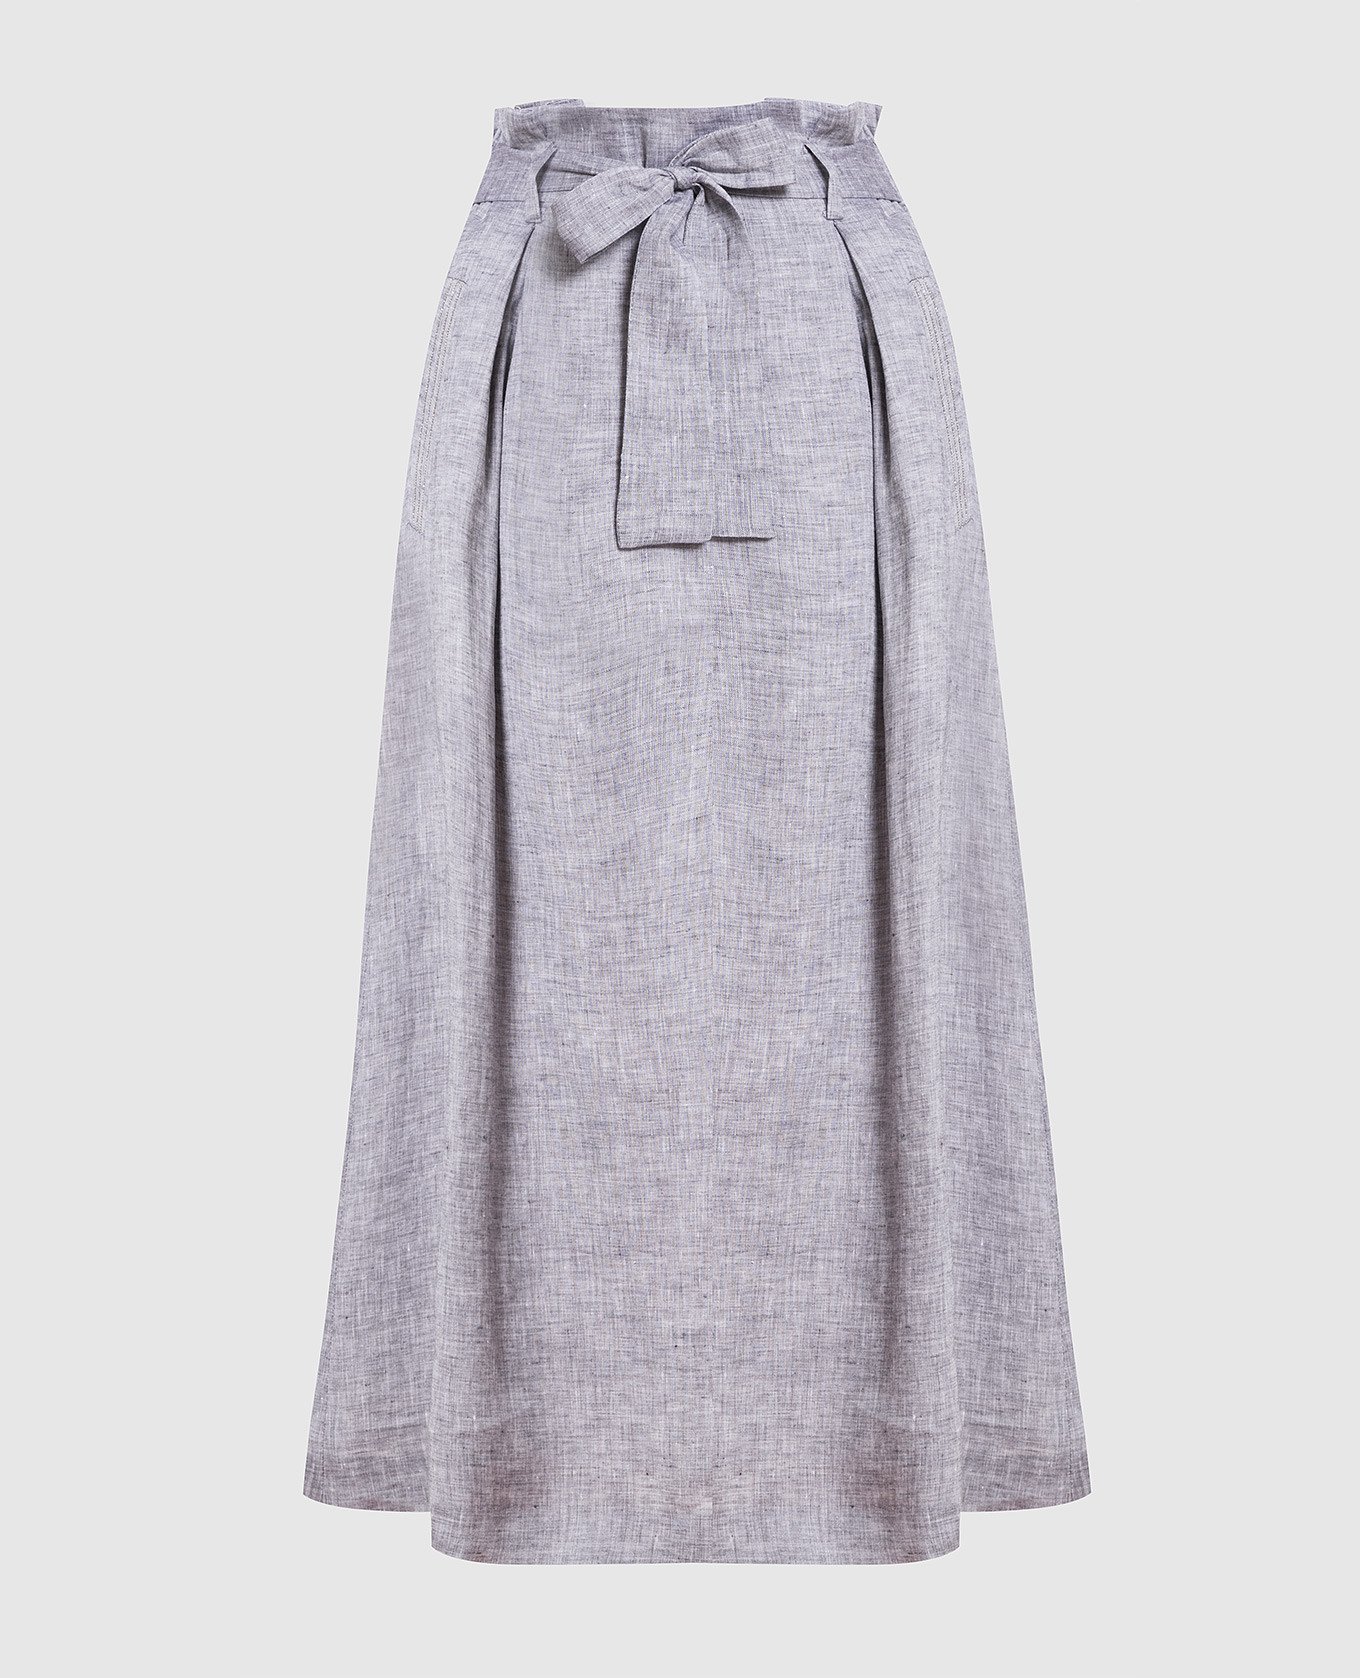 Gray linen midi skirt with monil chain